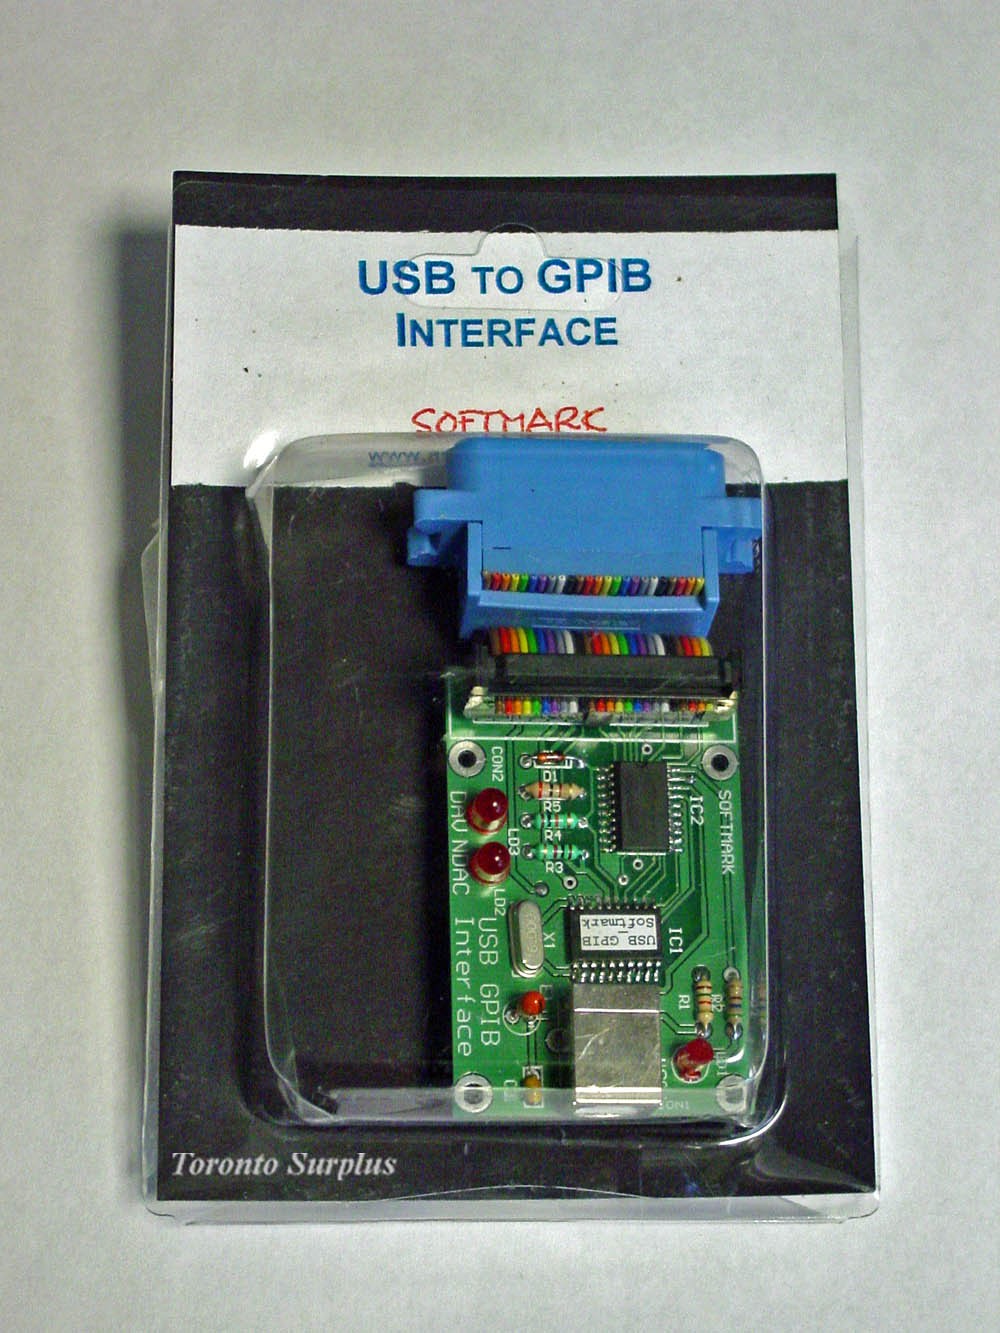 Softmark USB to GPIB Interface ver 1.3 / BNIB / NOS